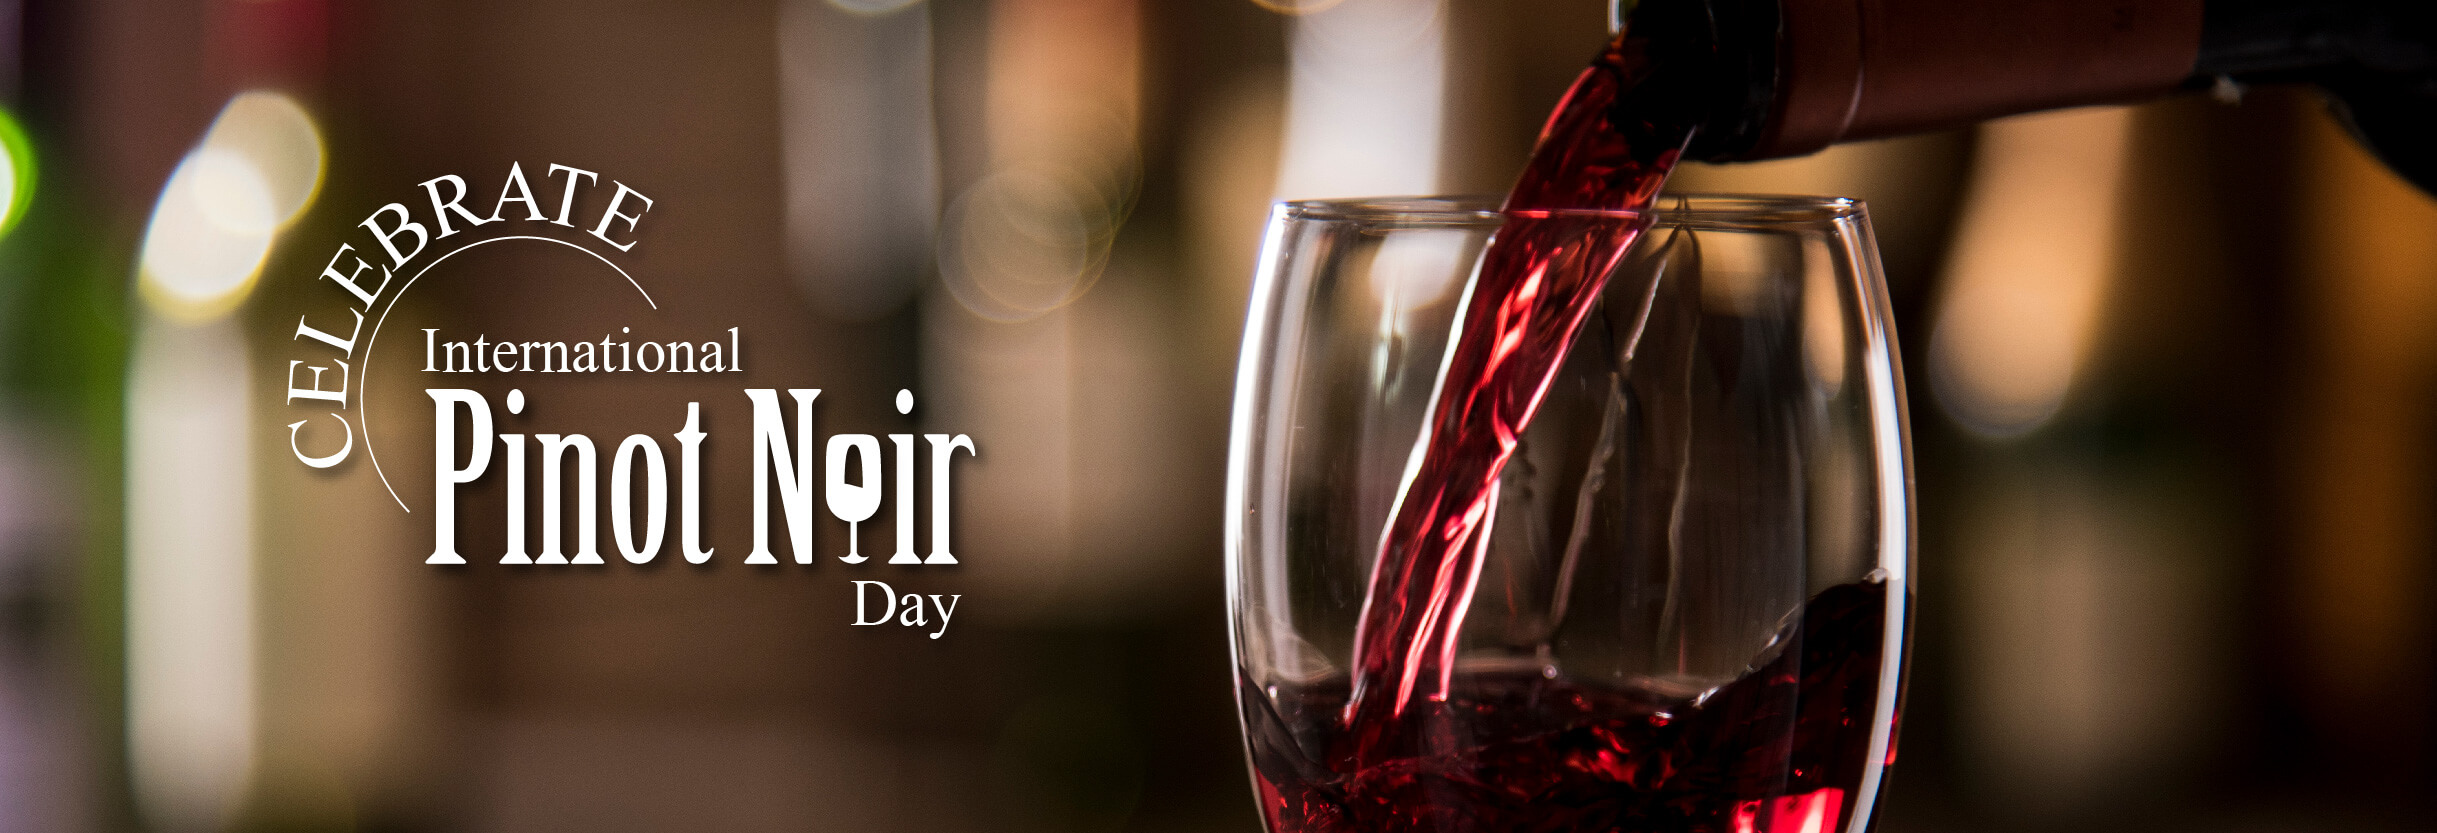 Celebrate International Pinot Noir Day